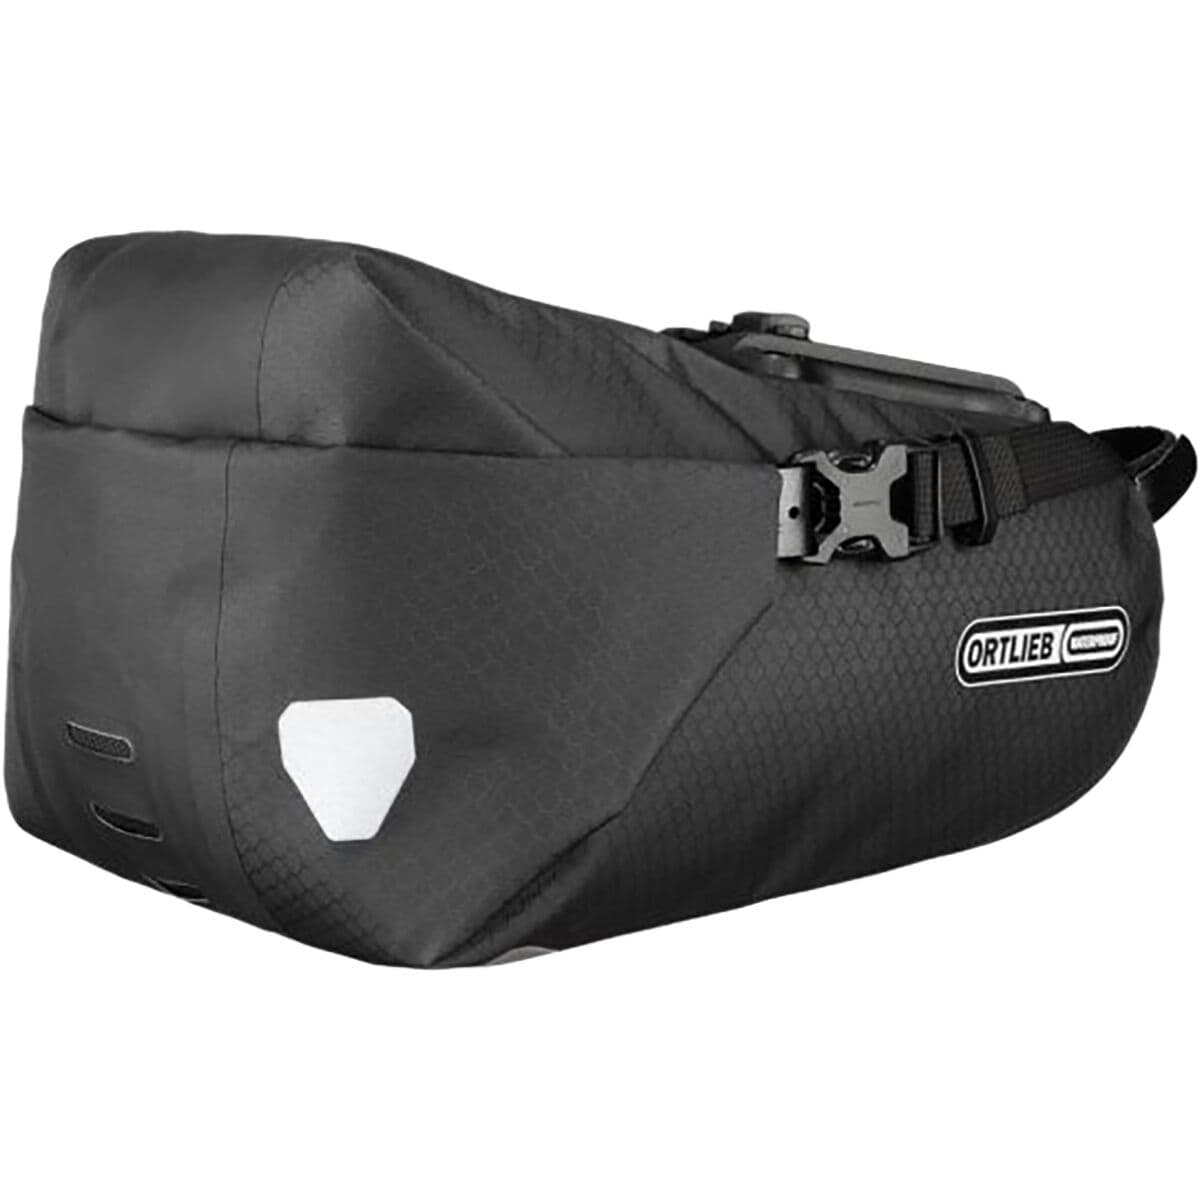 Ortlieb Saddle Bag Two - 4.1 Liters Black